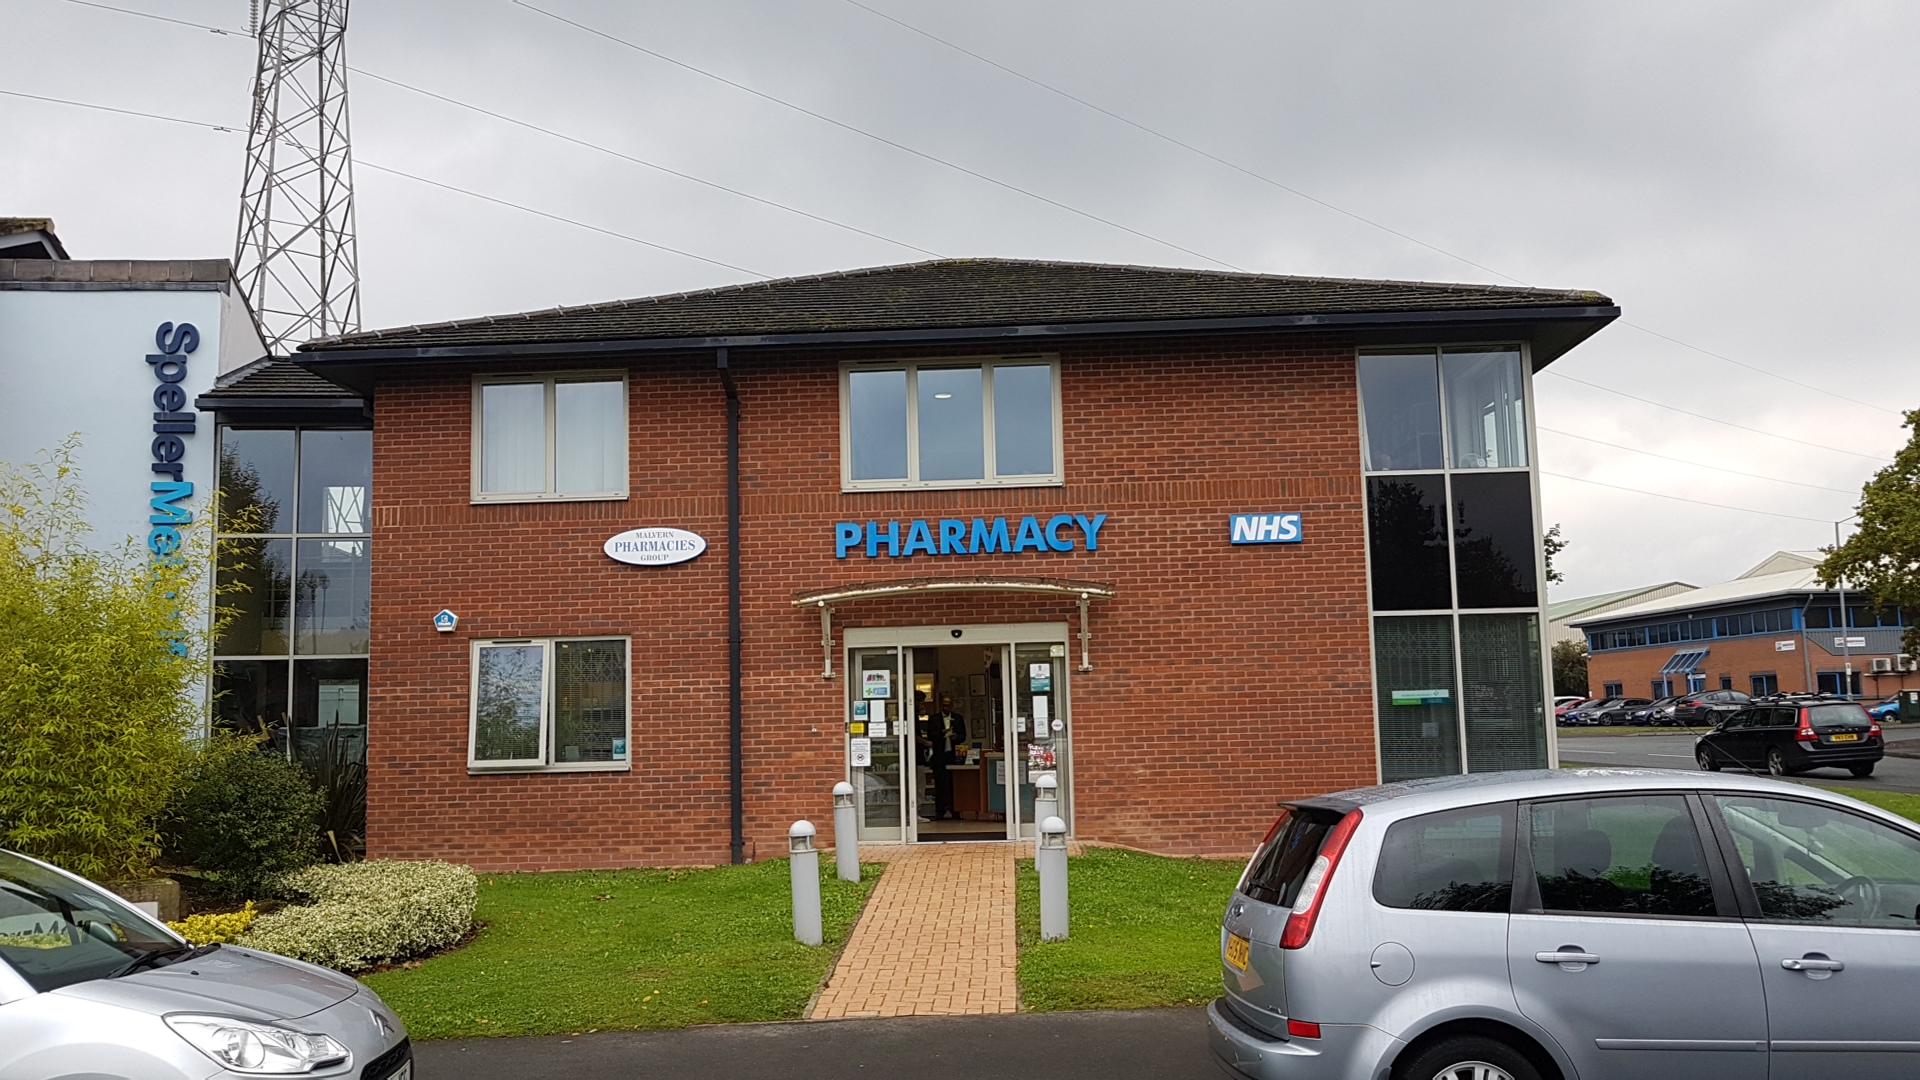 Malvern Pharmacies Group